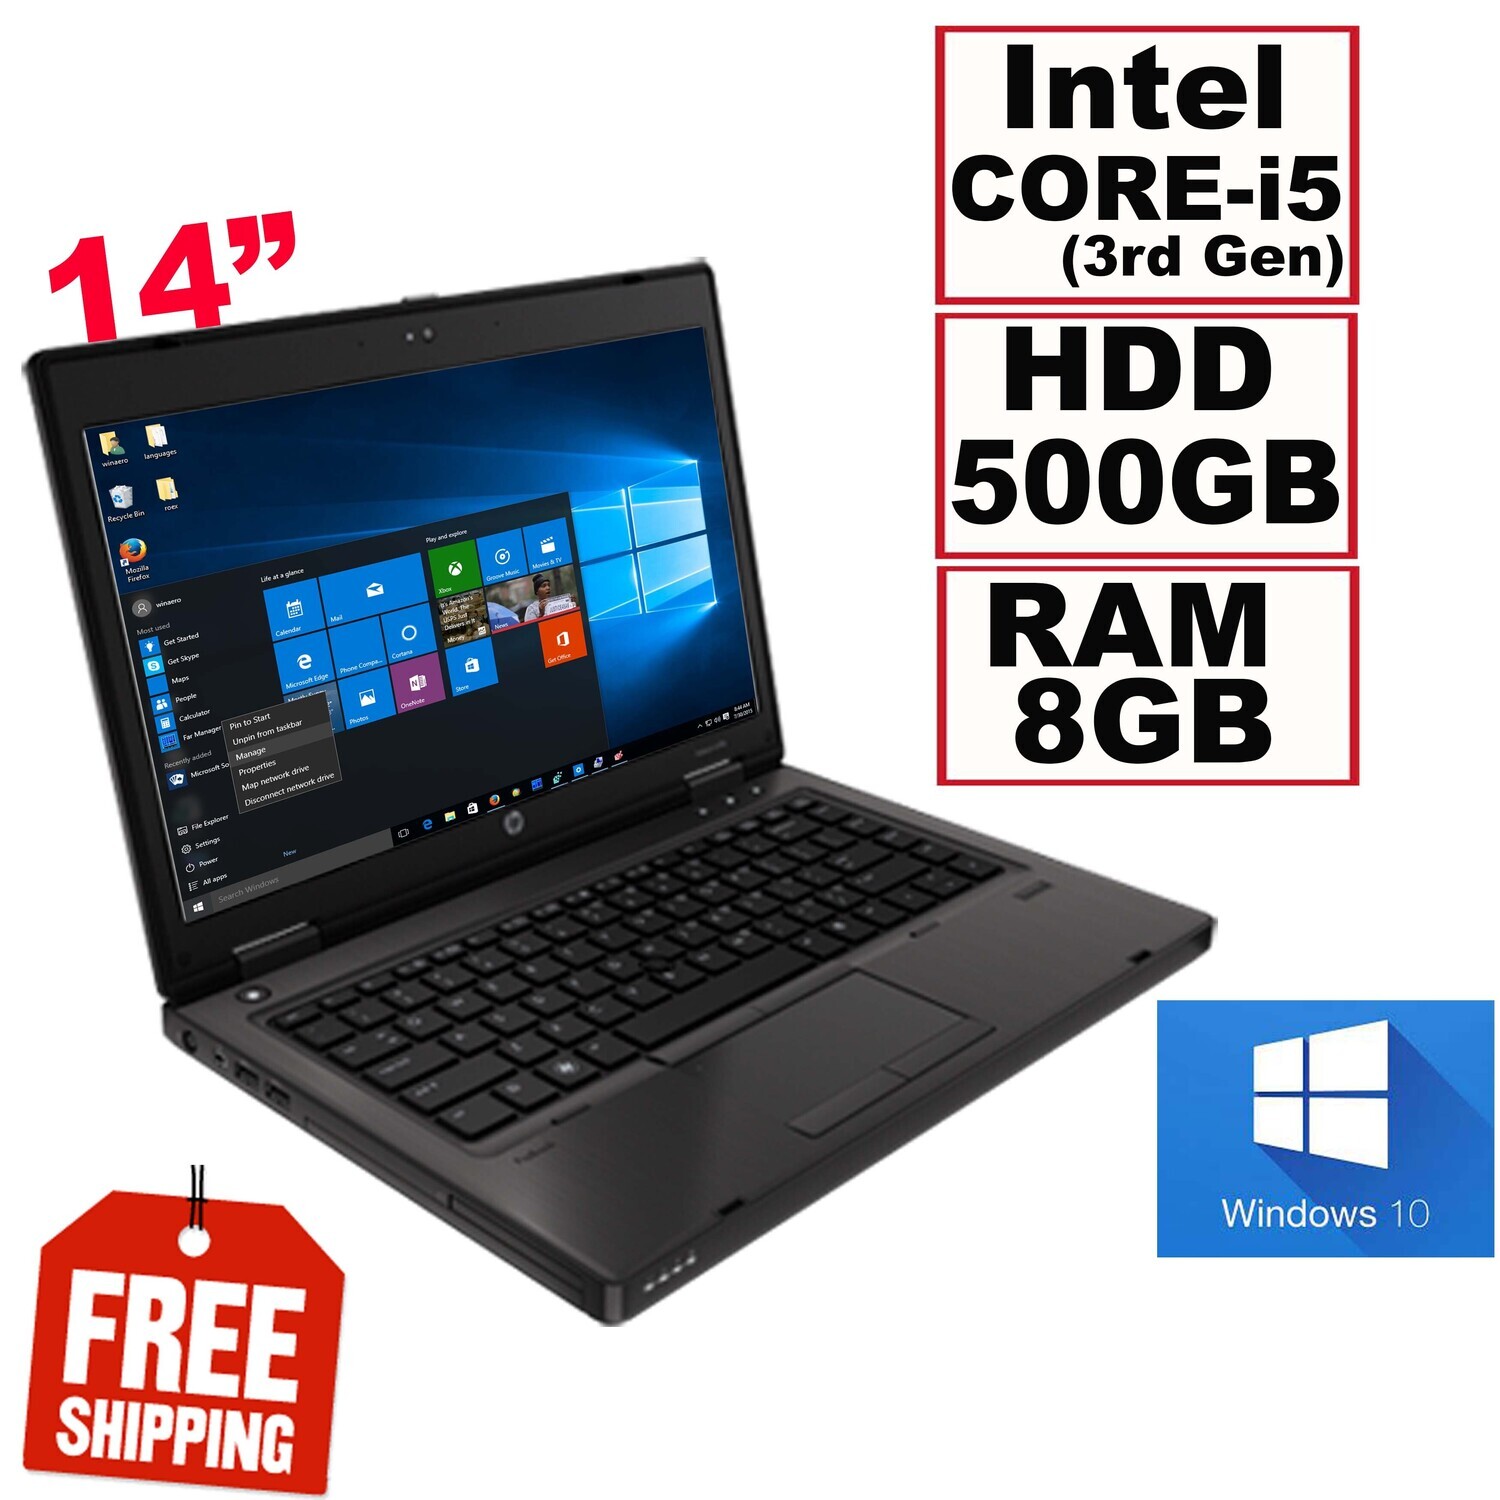 HP ProBook 6470b -14" LED i5-3rd Gen 8GB  500 GB HDD Notebook Laptop HD Graphics Win10